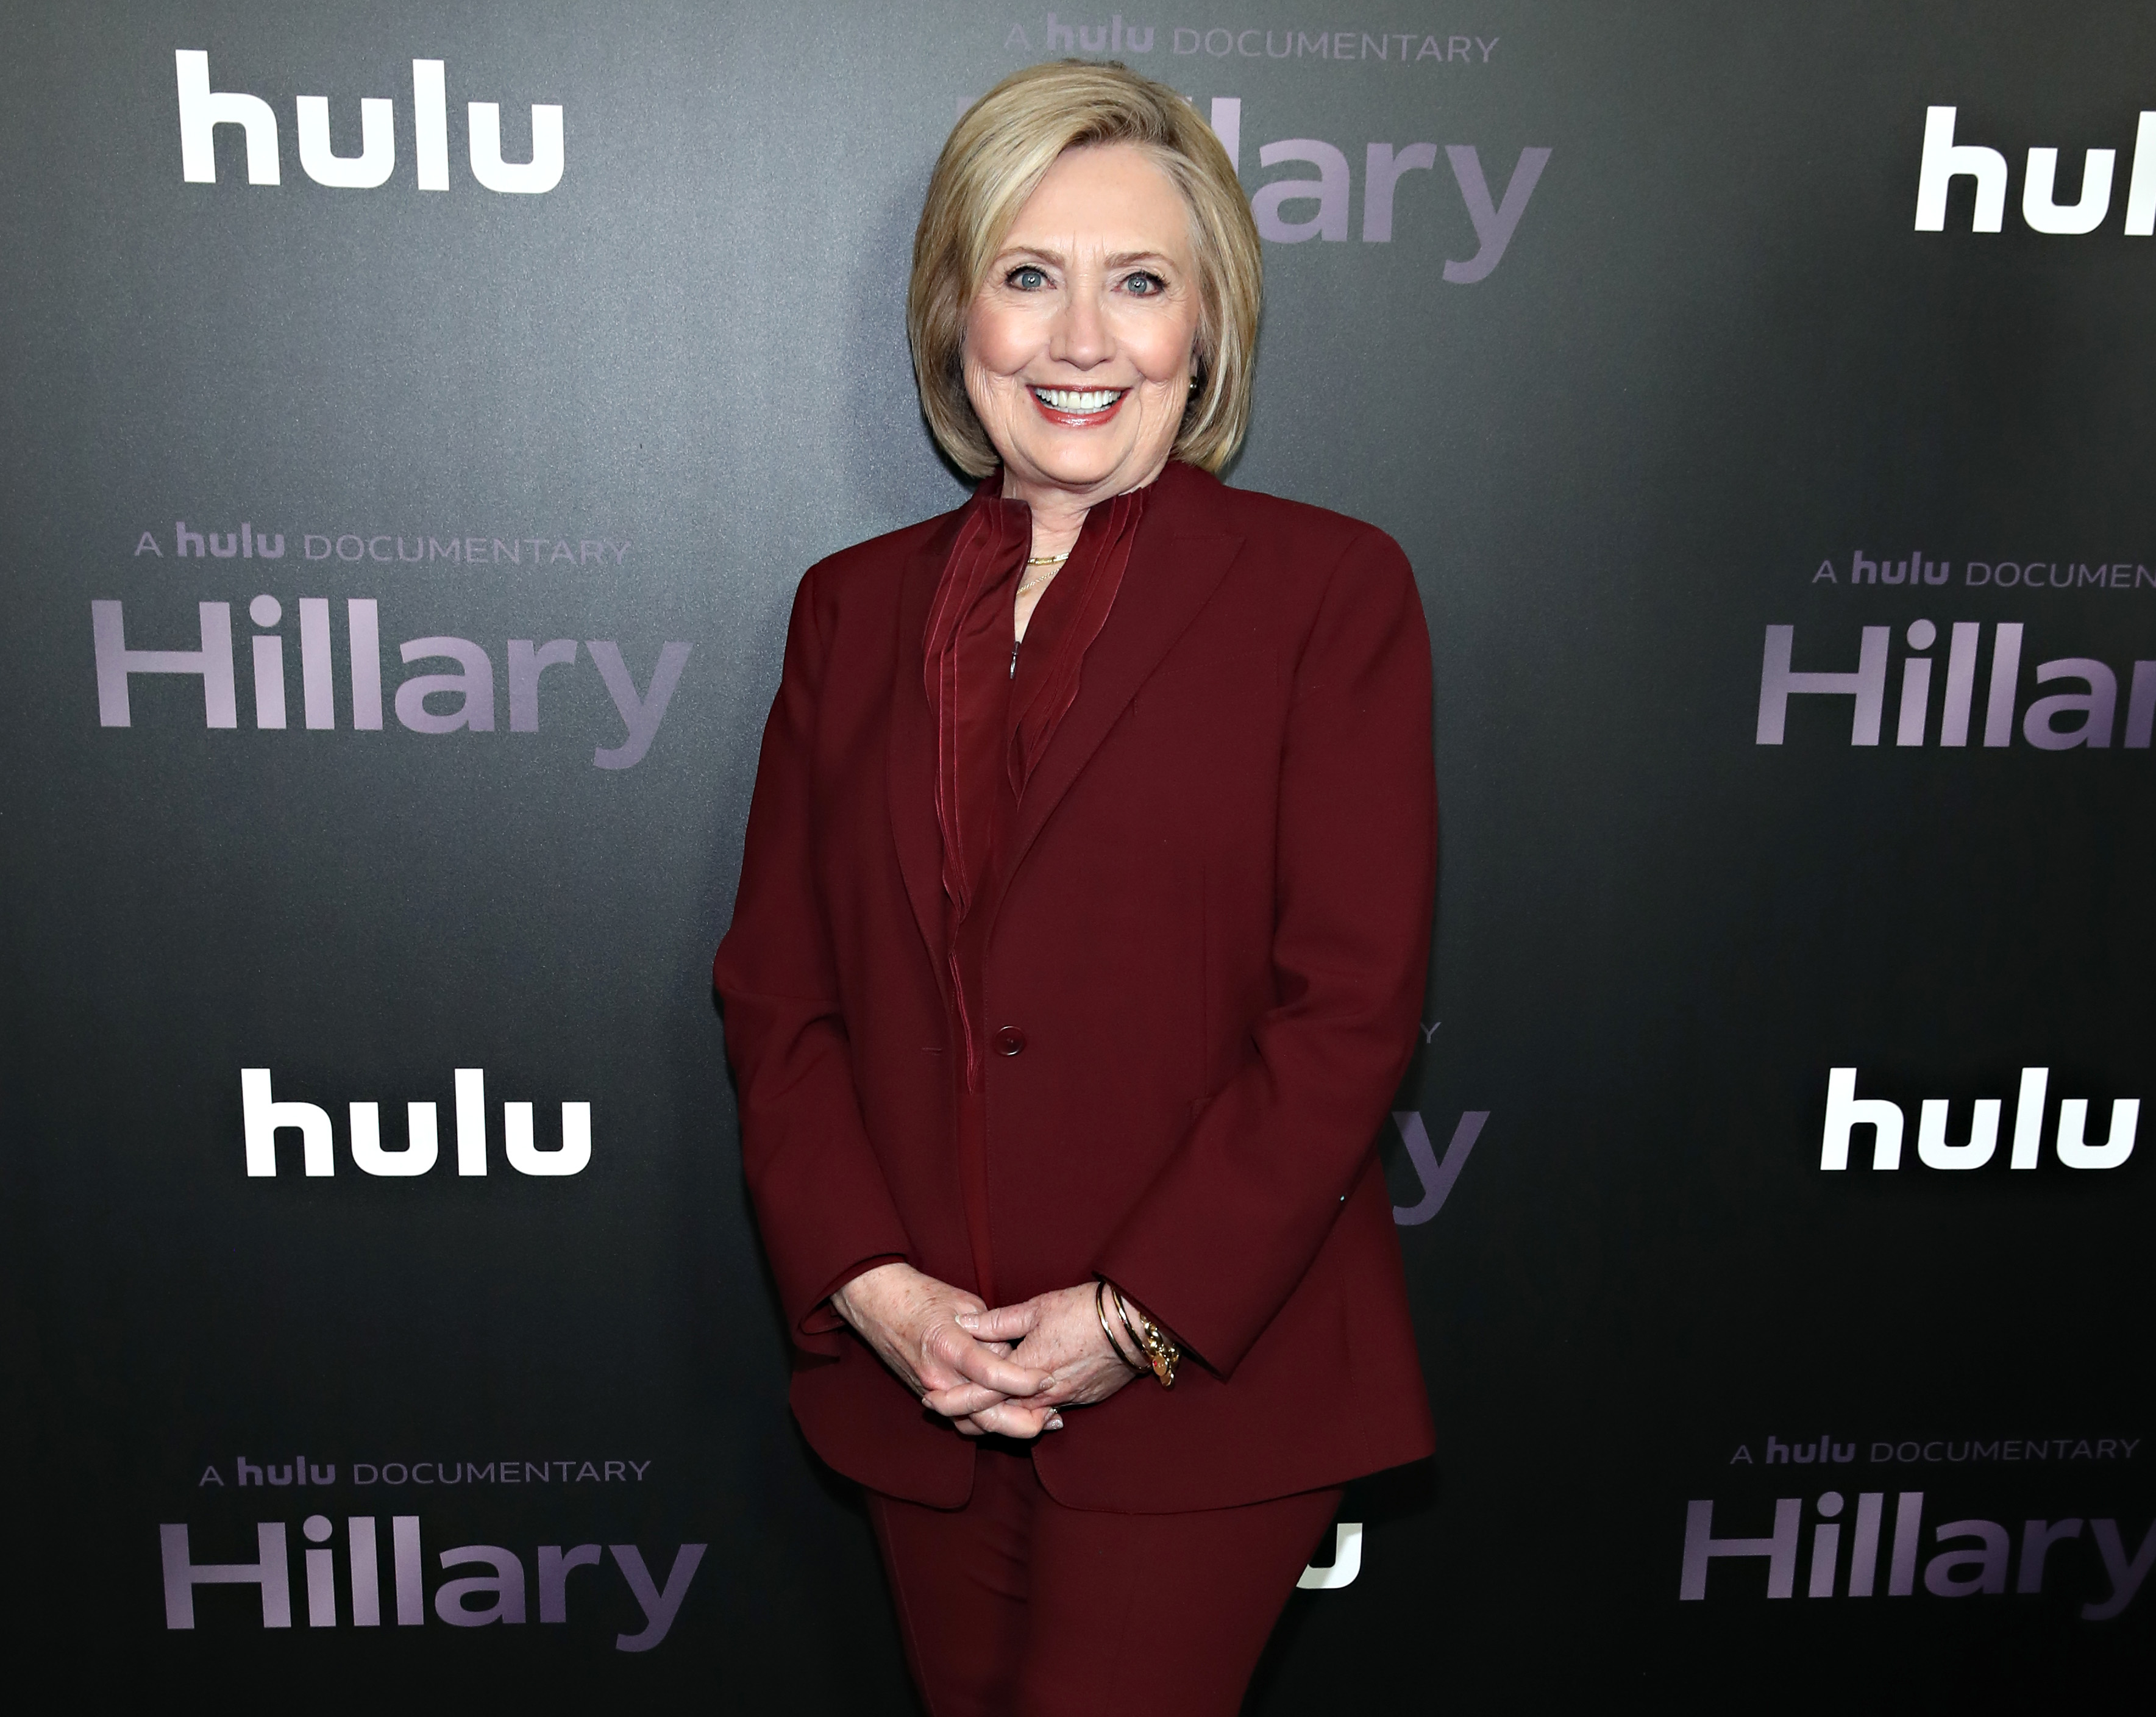 Hillary On Hulu